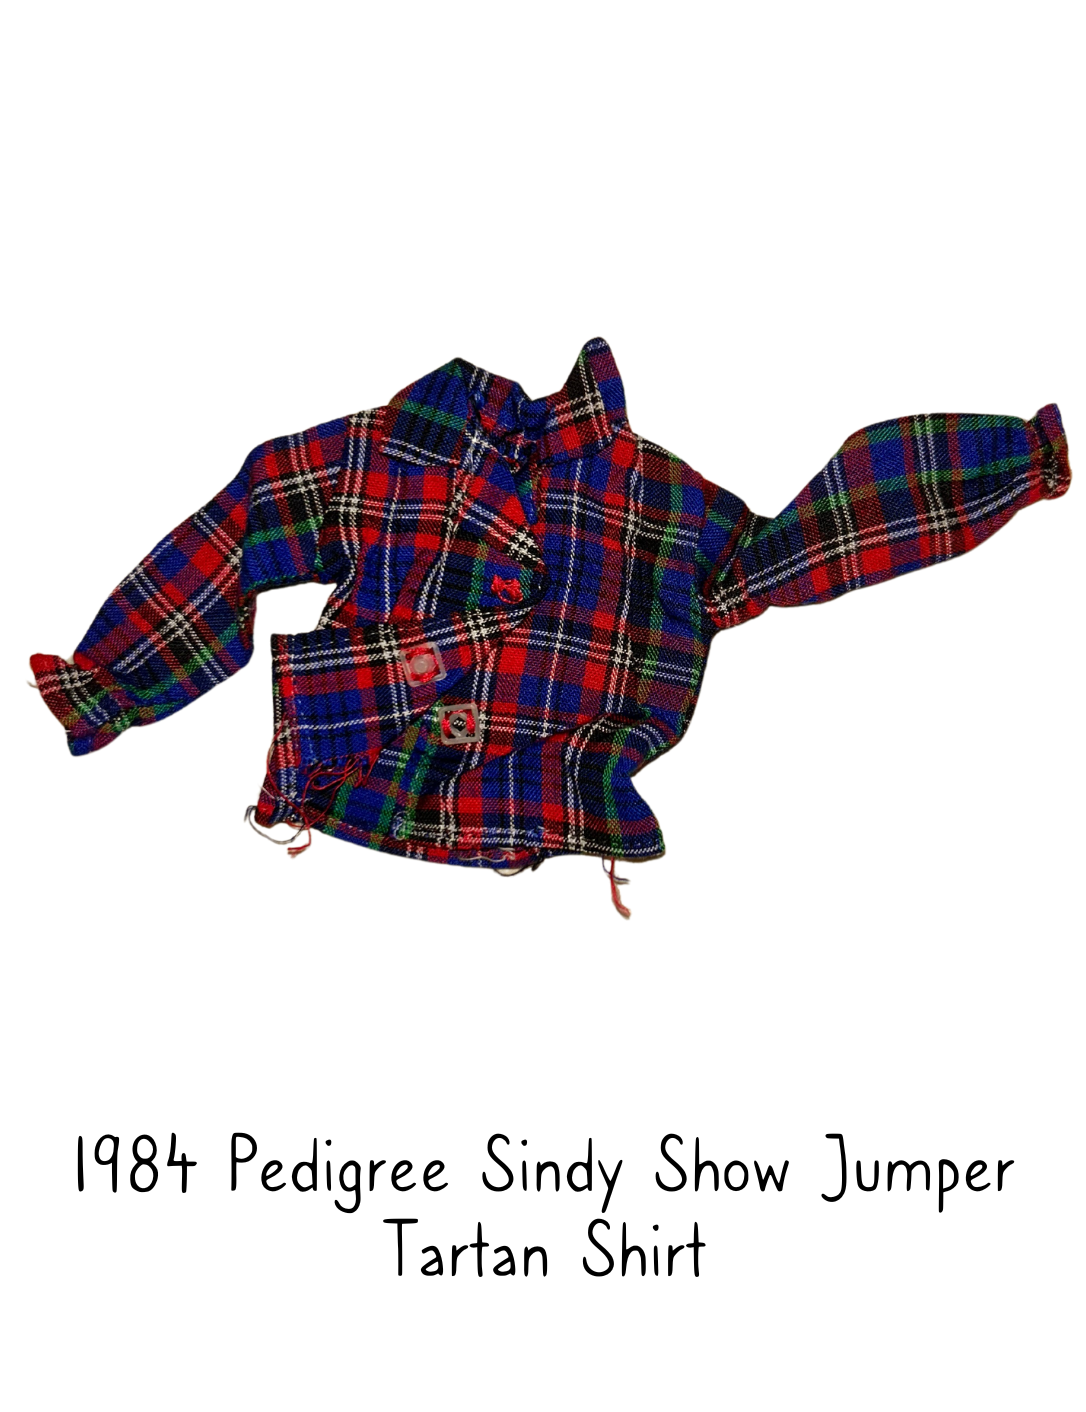 1984 Pedigree Sindy Fashion Doll Show Jumper Tartan Shirt